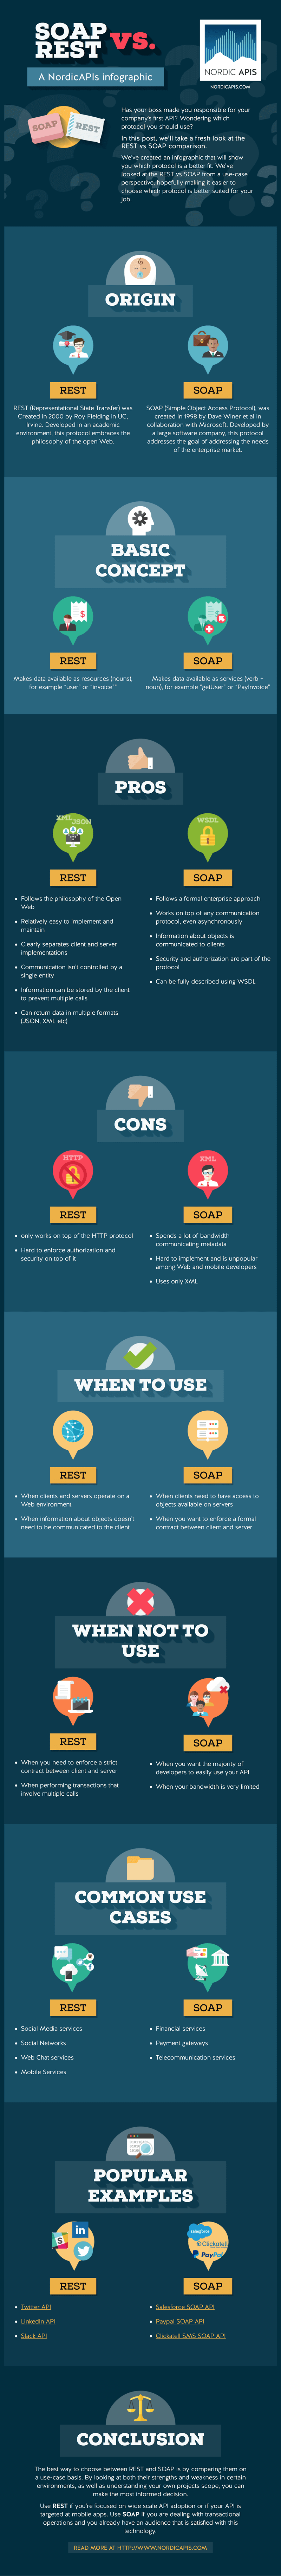 soap_vs_rest_infographics